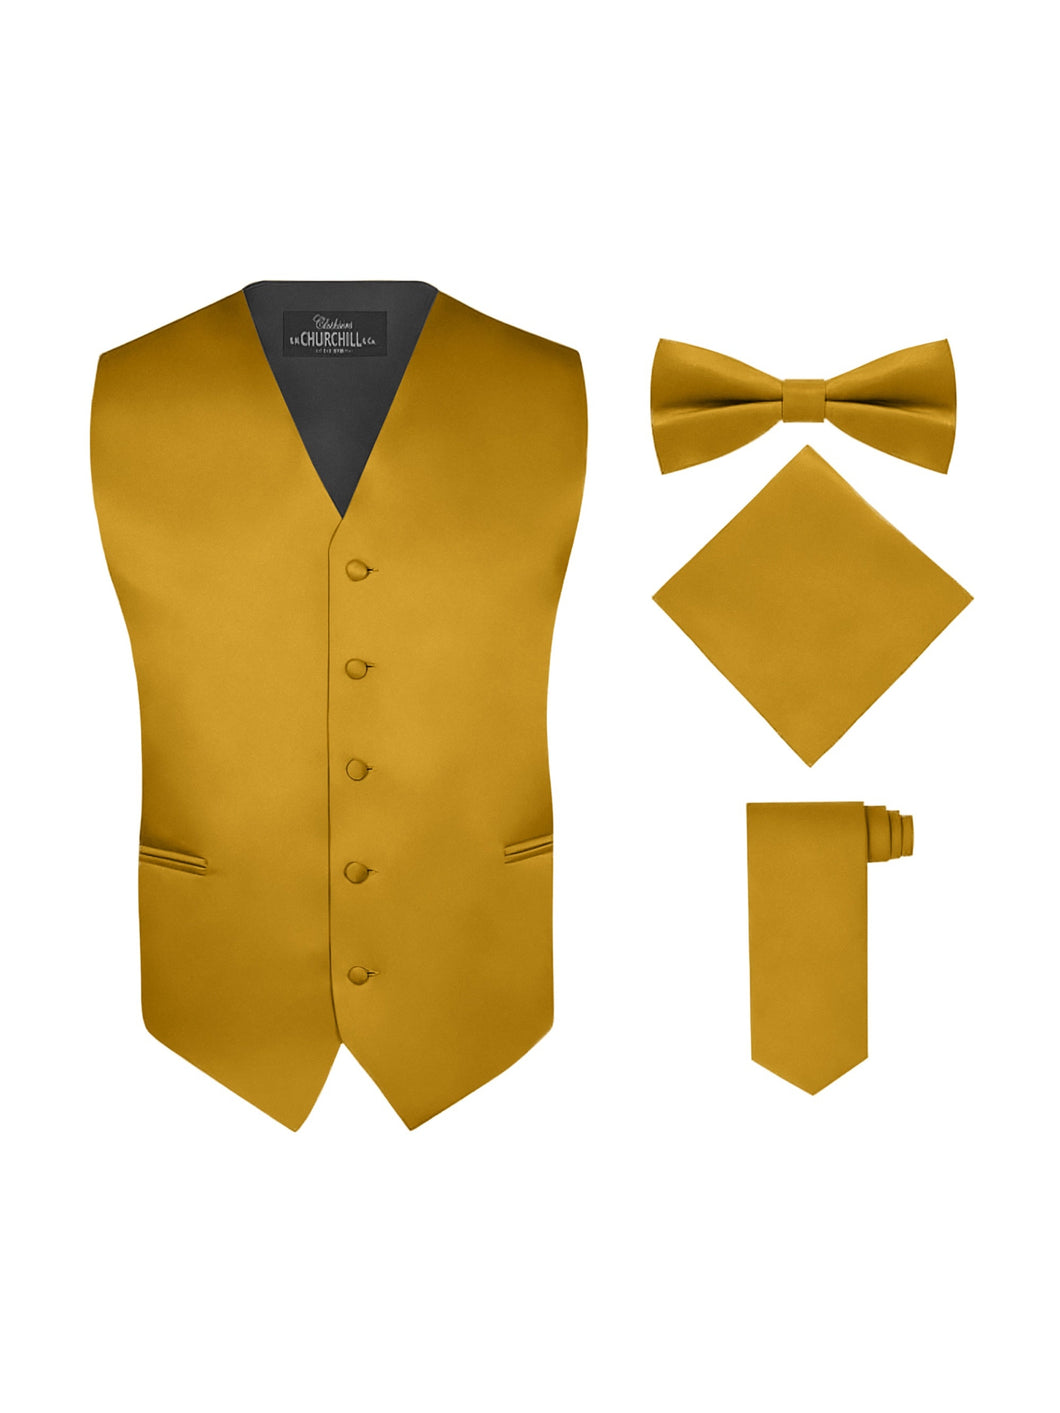 S.H. Churchill & Co. Men's 4 Piece Gold Vest Set, with Bow Tie, Neck Tie & Pocket Hankie